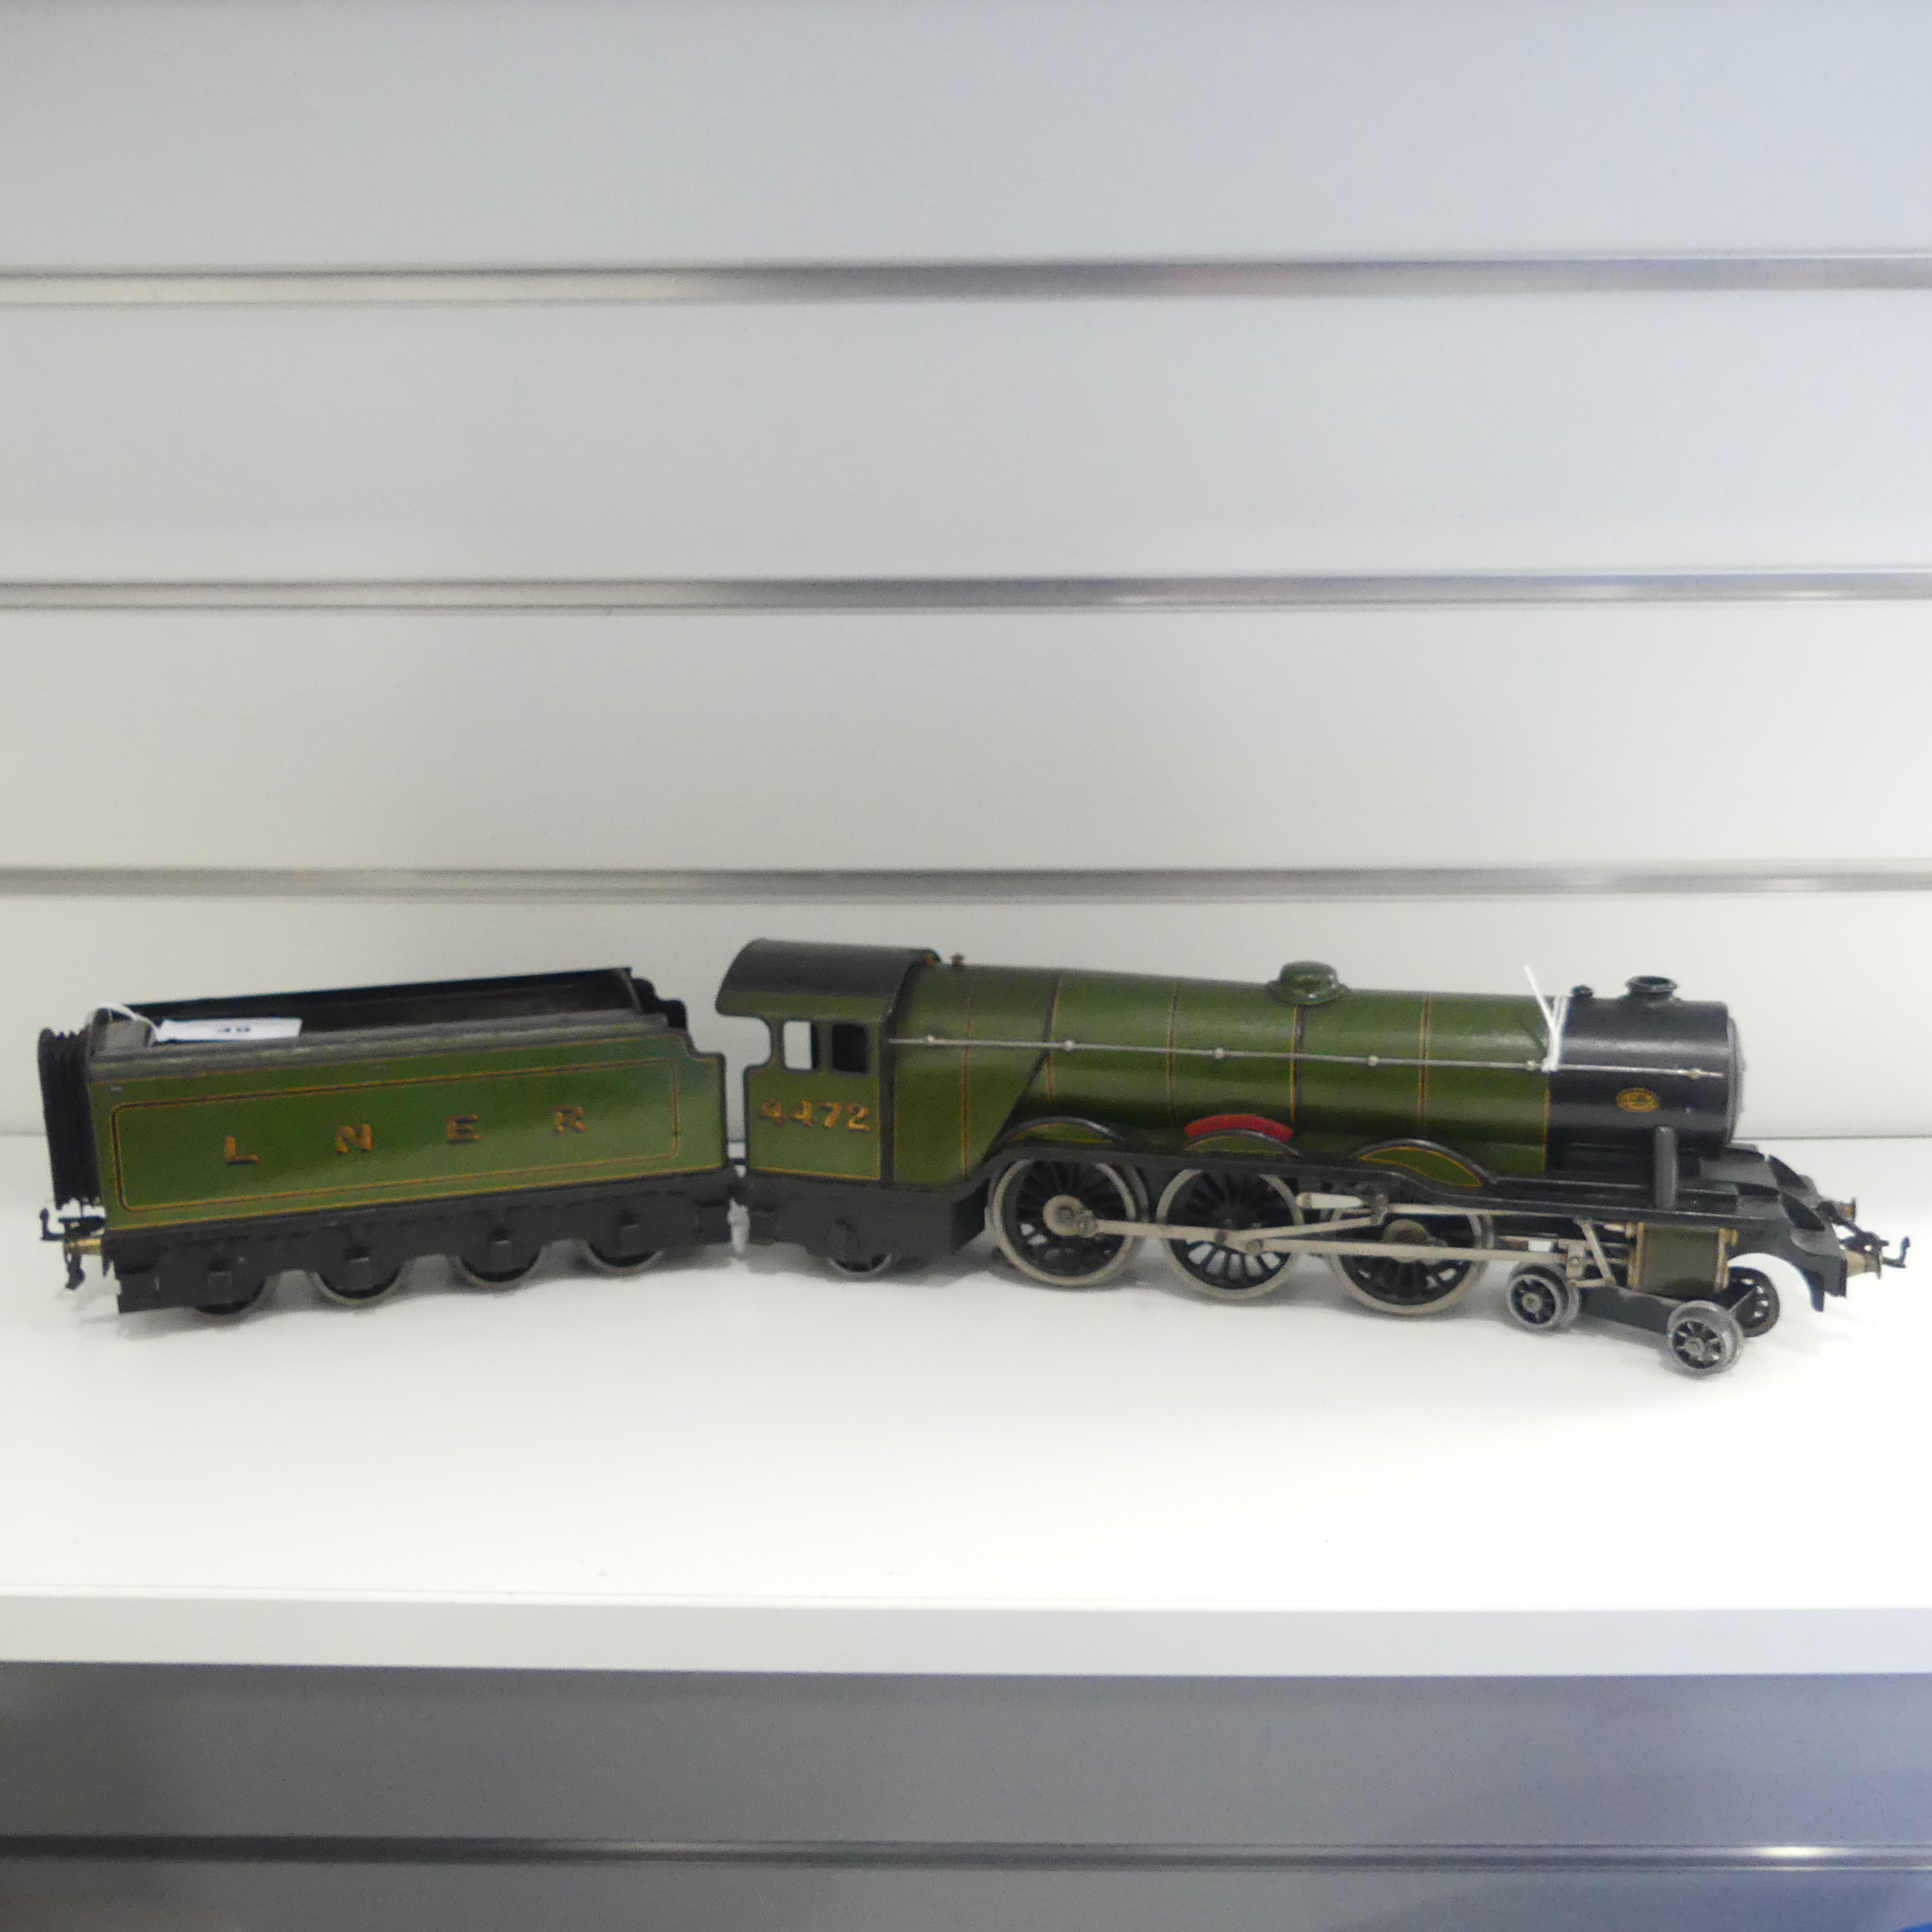 Bassett-Lowke '0' gauge 4-6-2 Locomotive and Tender A3 Class 'Flying Scotsman' No.4472, L.N.E.R.